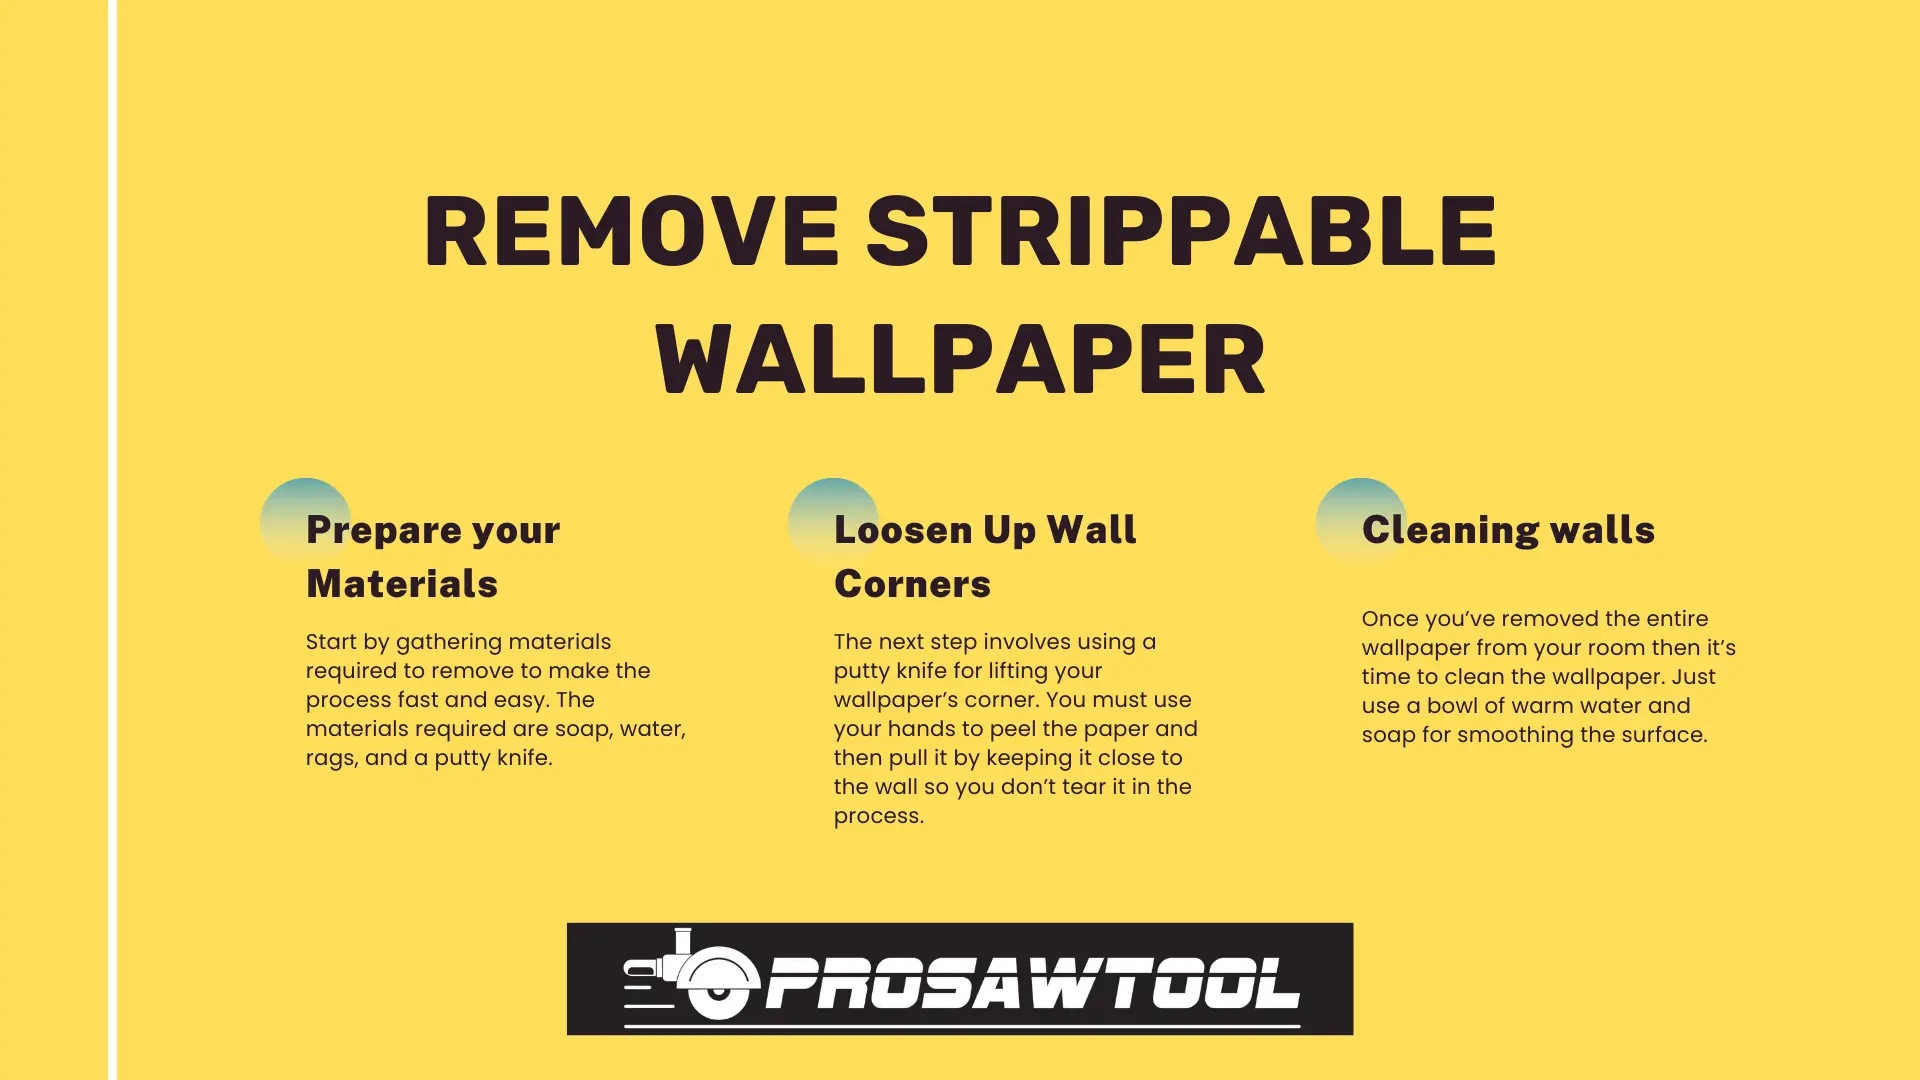 Remove Strippable Wallpaper